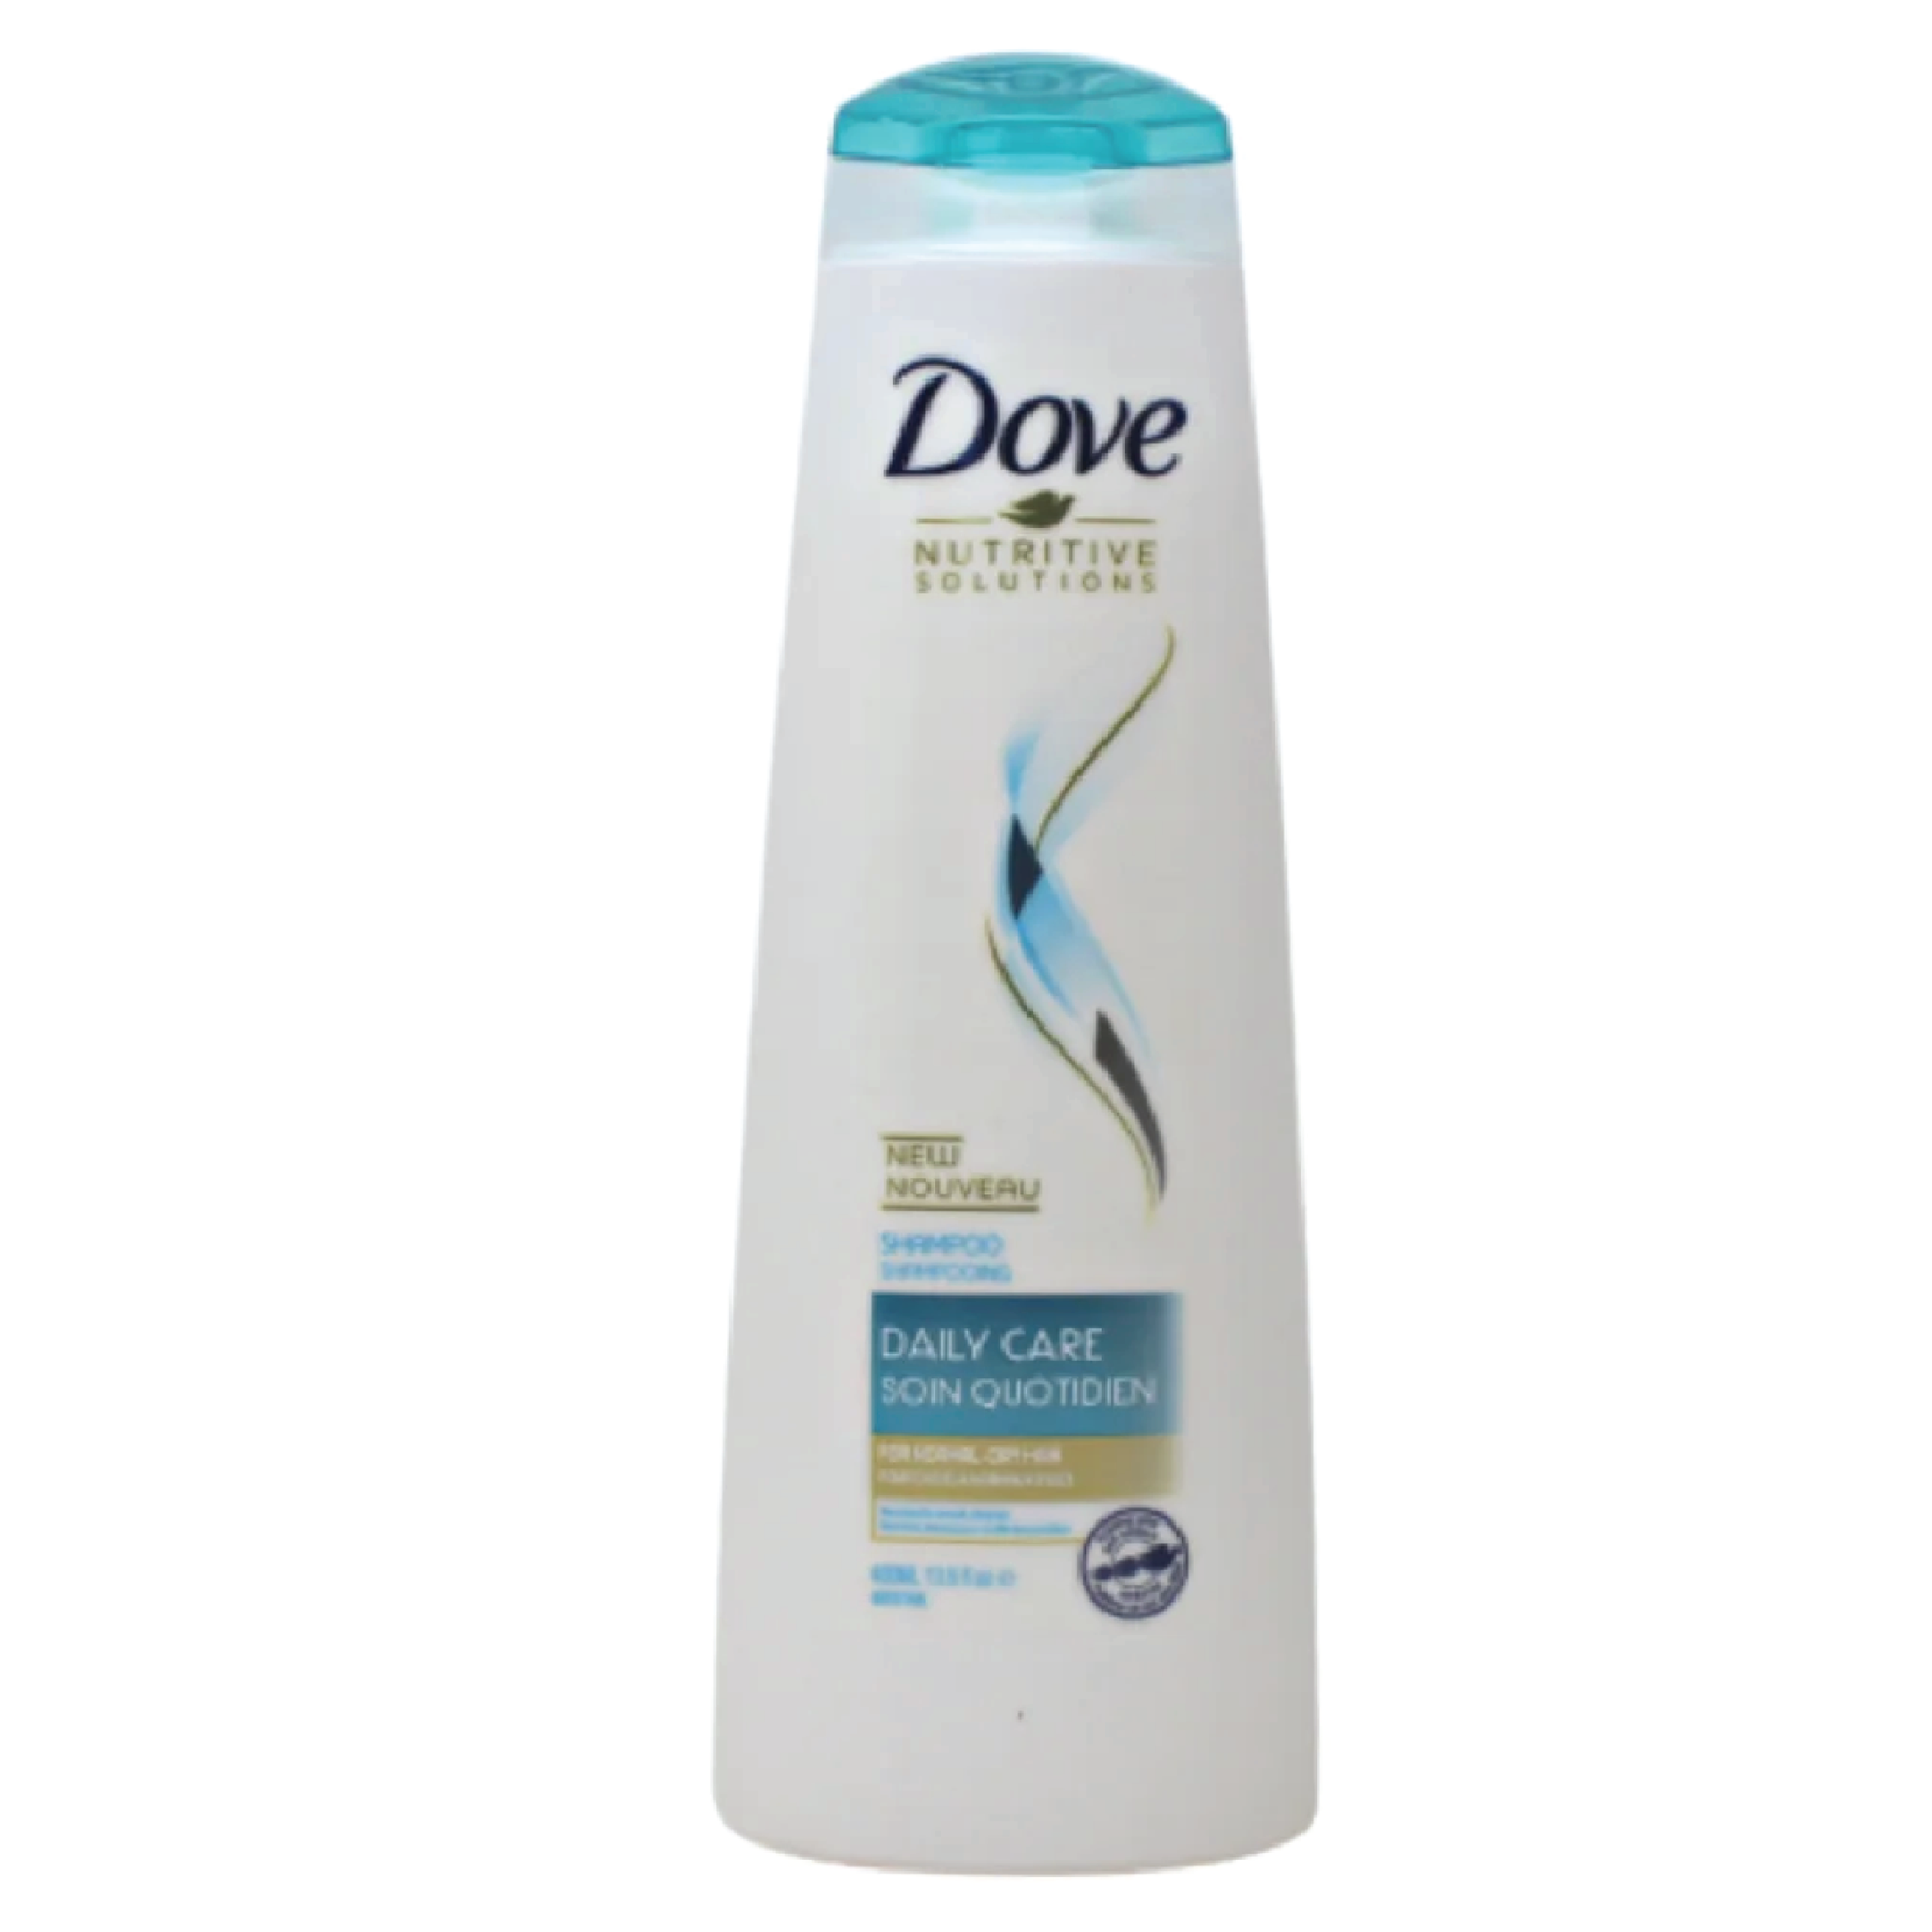 Dove Nutritive Solutions Daily Care Moisture Shampoo 13.5oz